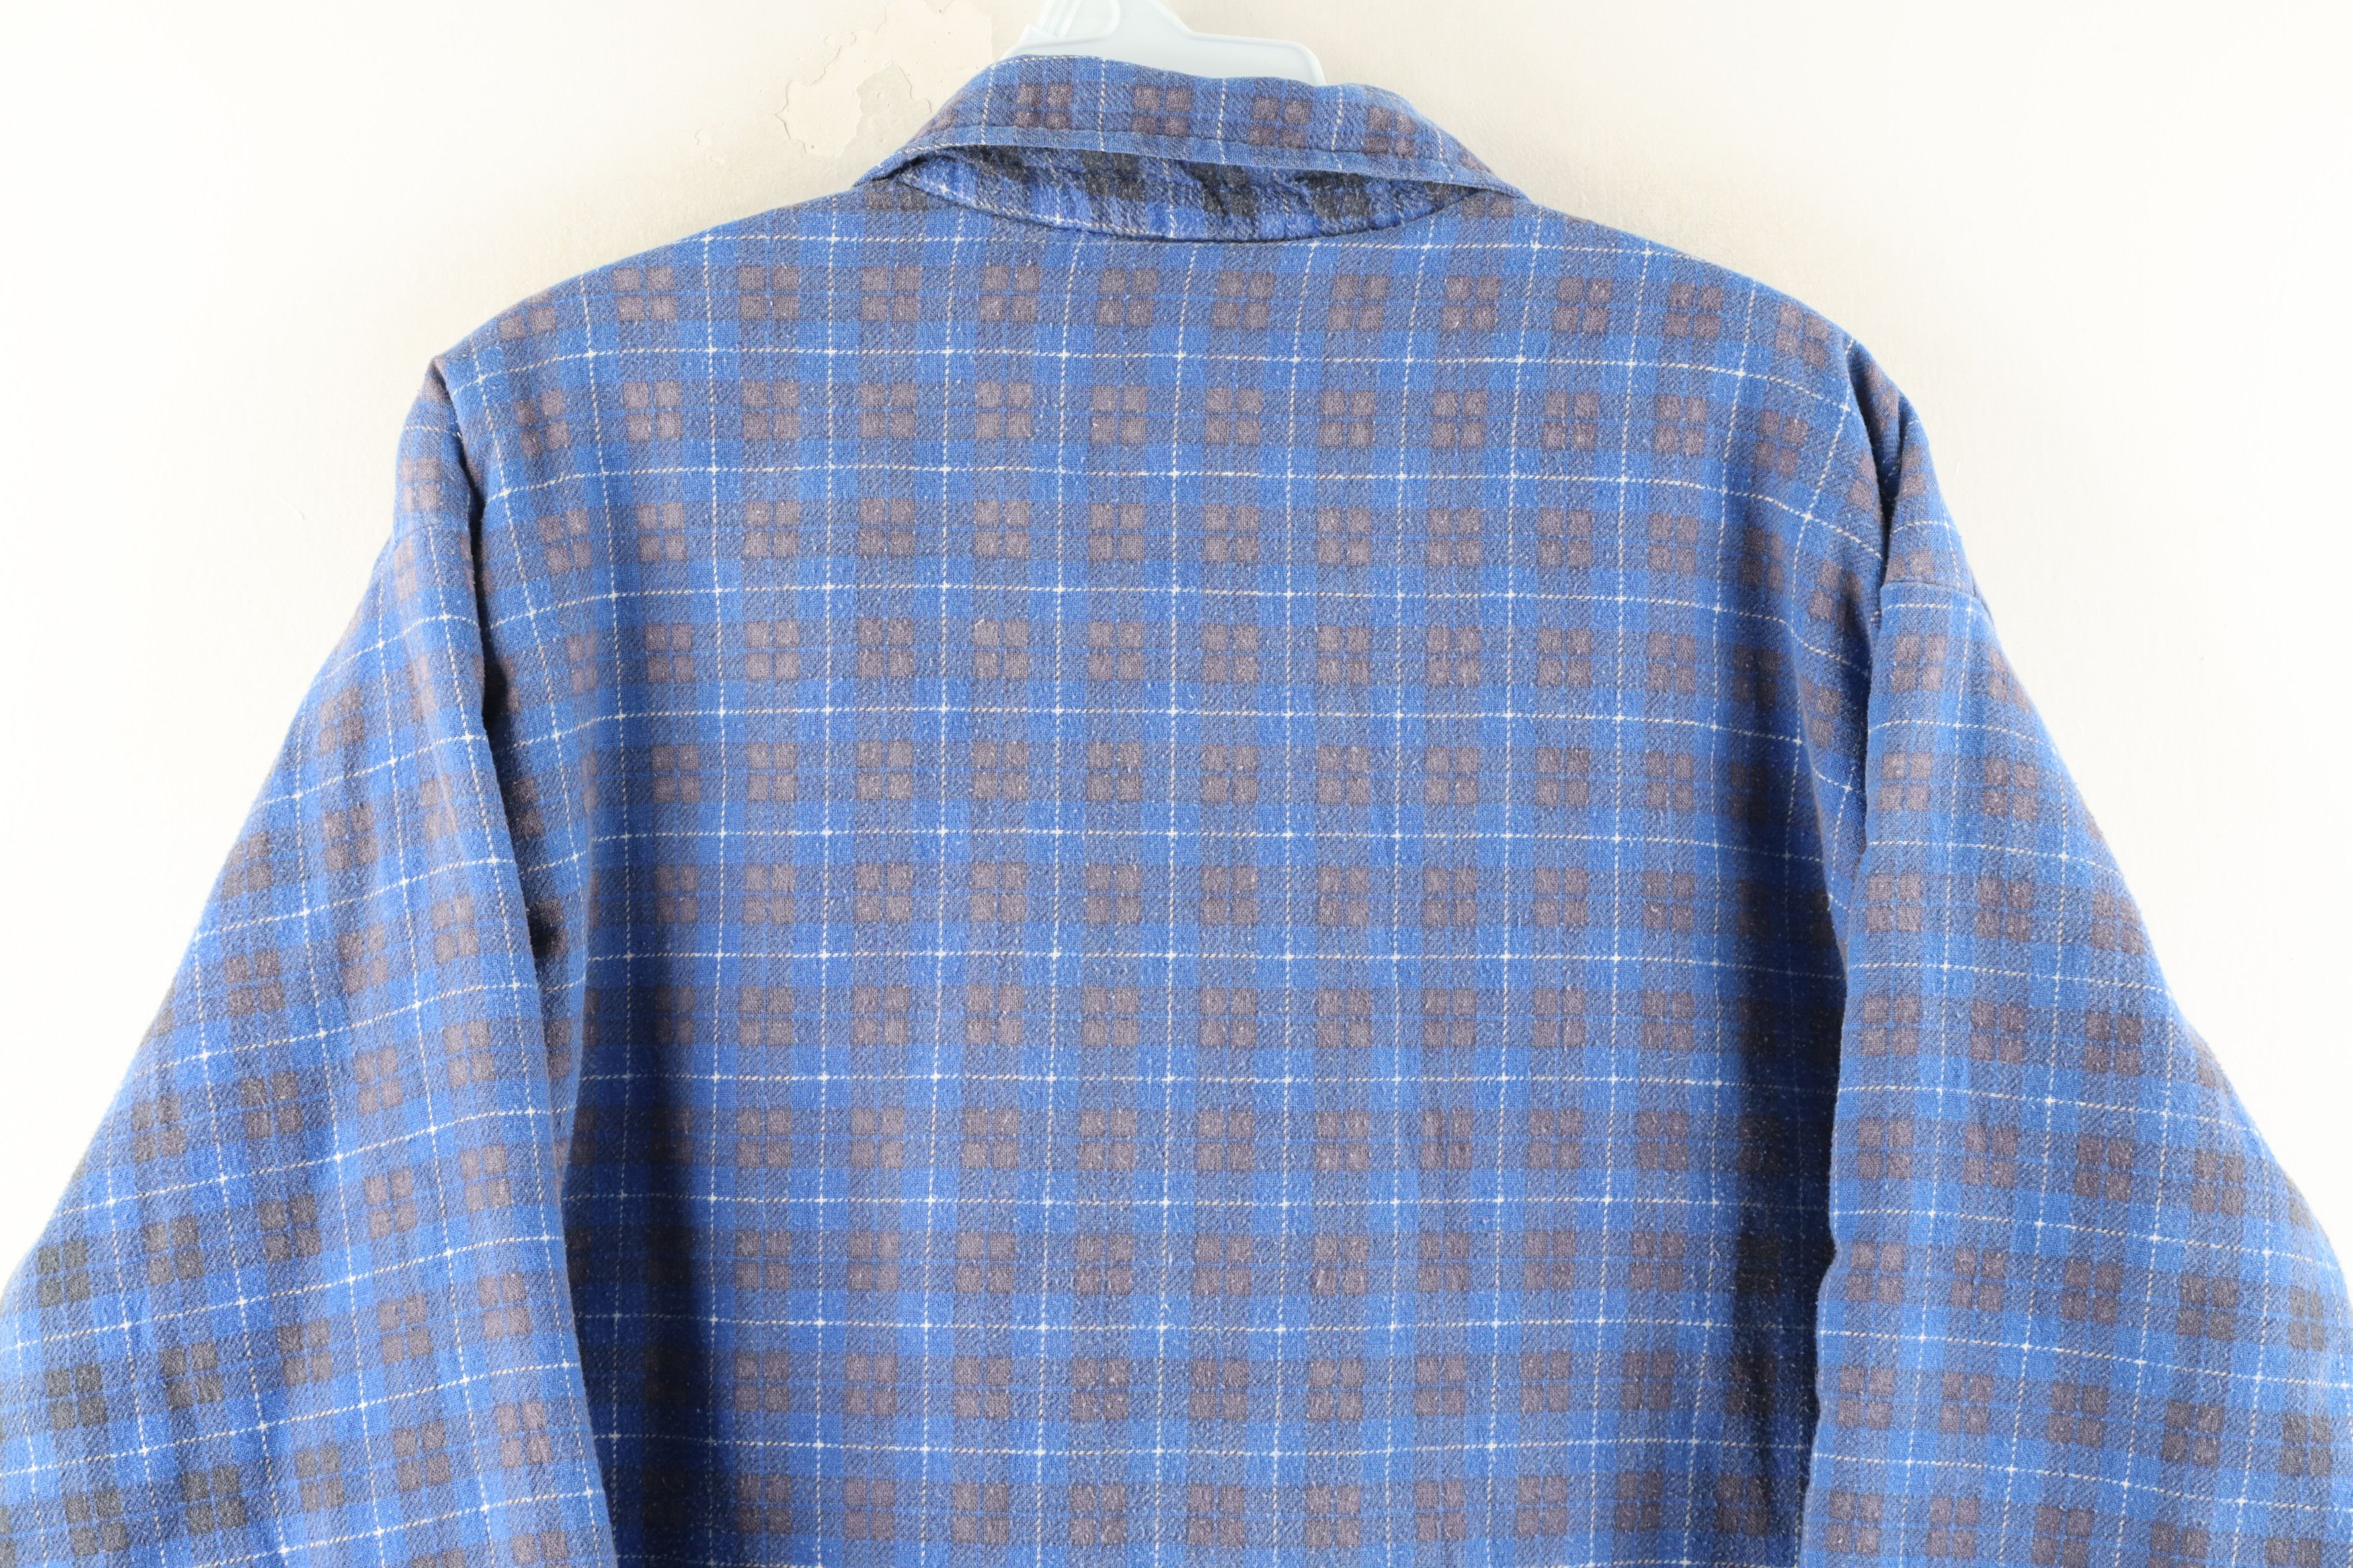 Vintage Vintage 80s Lee Thrashed Double Pocket Flannel Shirt Jacket Size US L / EU 52-54 / 3 - 7 Thumbnail